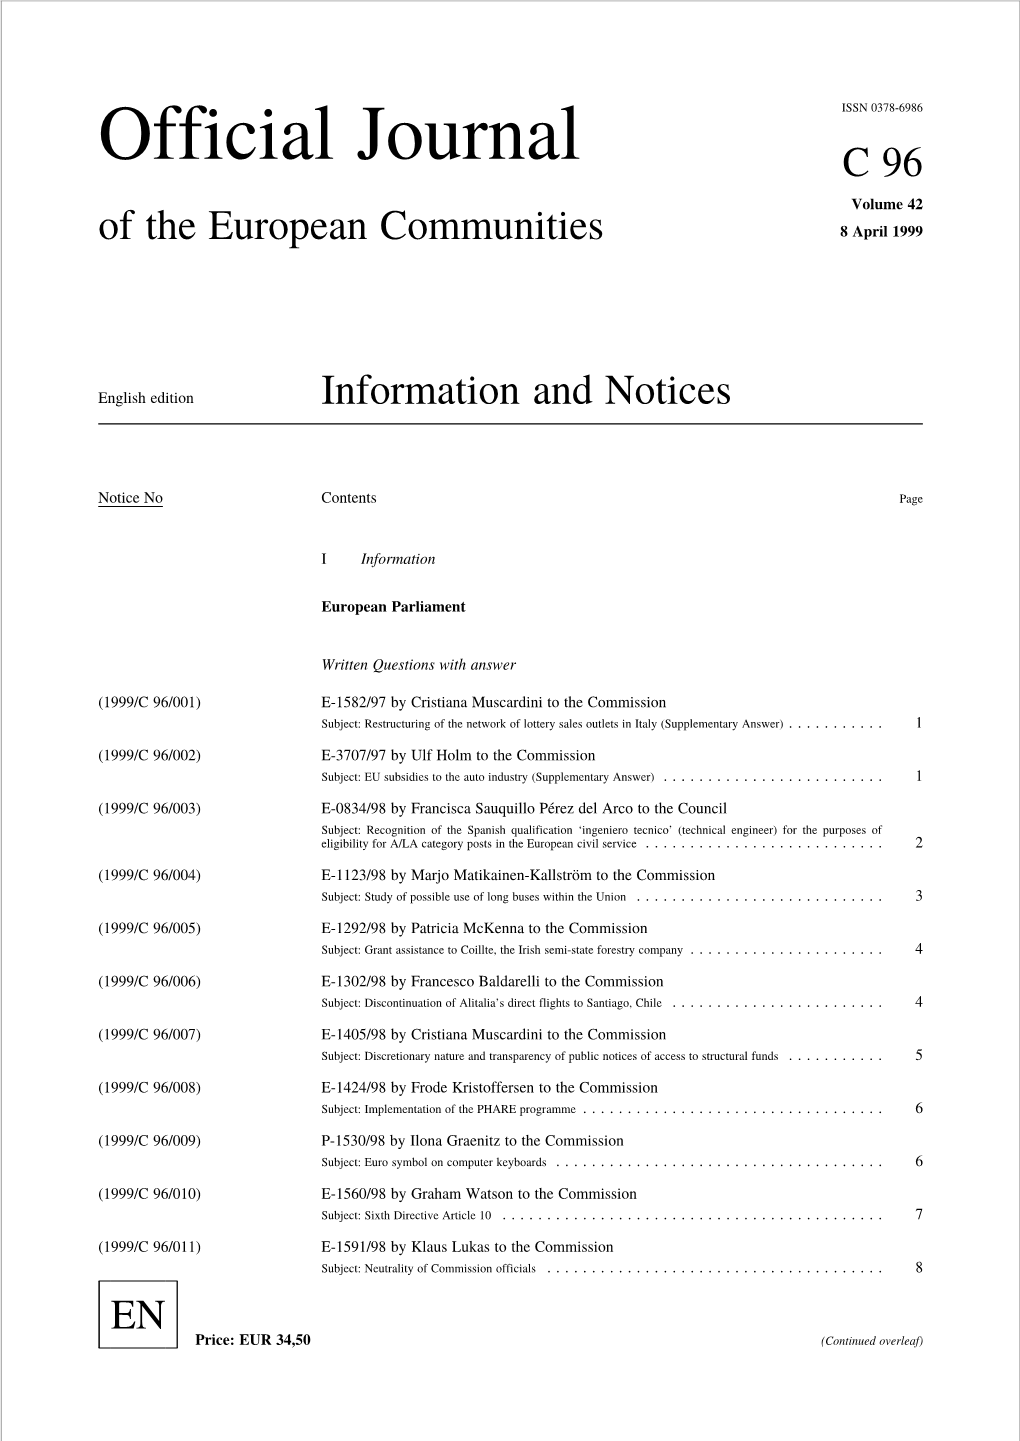 Official Journal C96 Volume 42 of the European Communities 8 April 1999